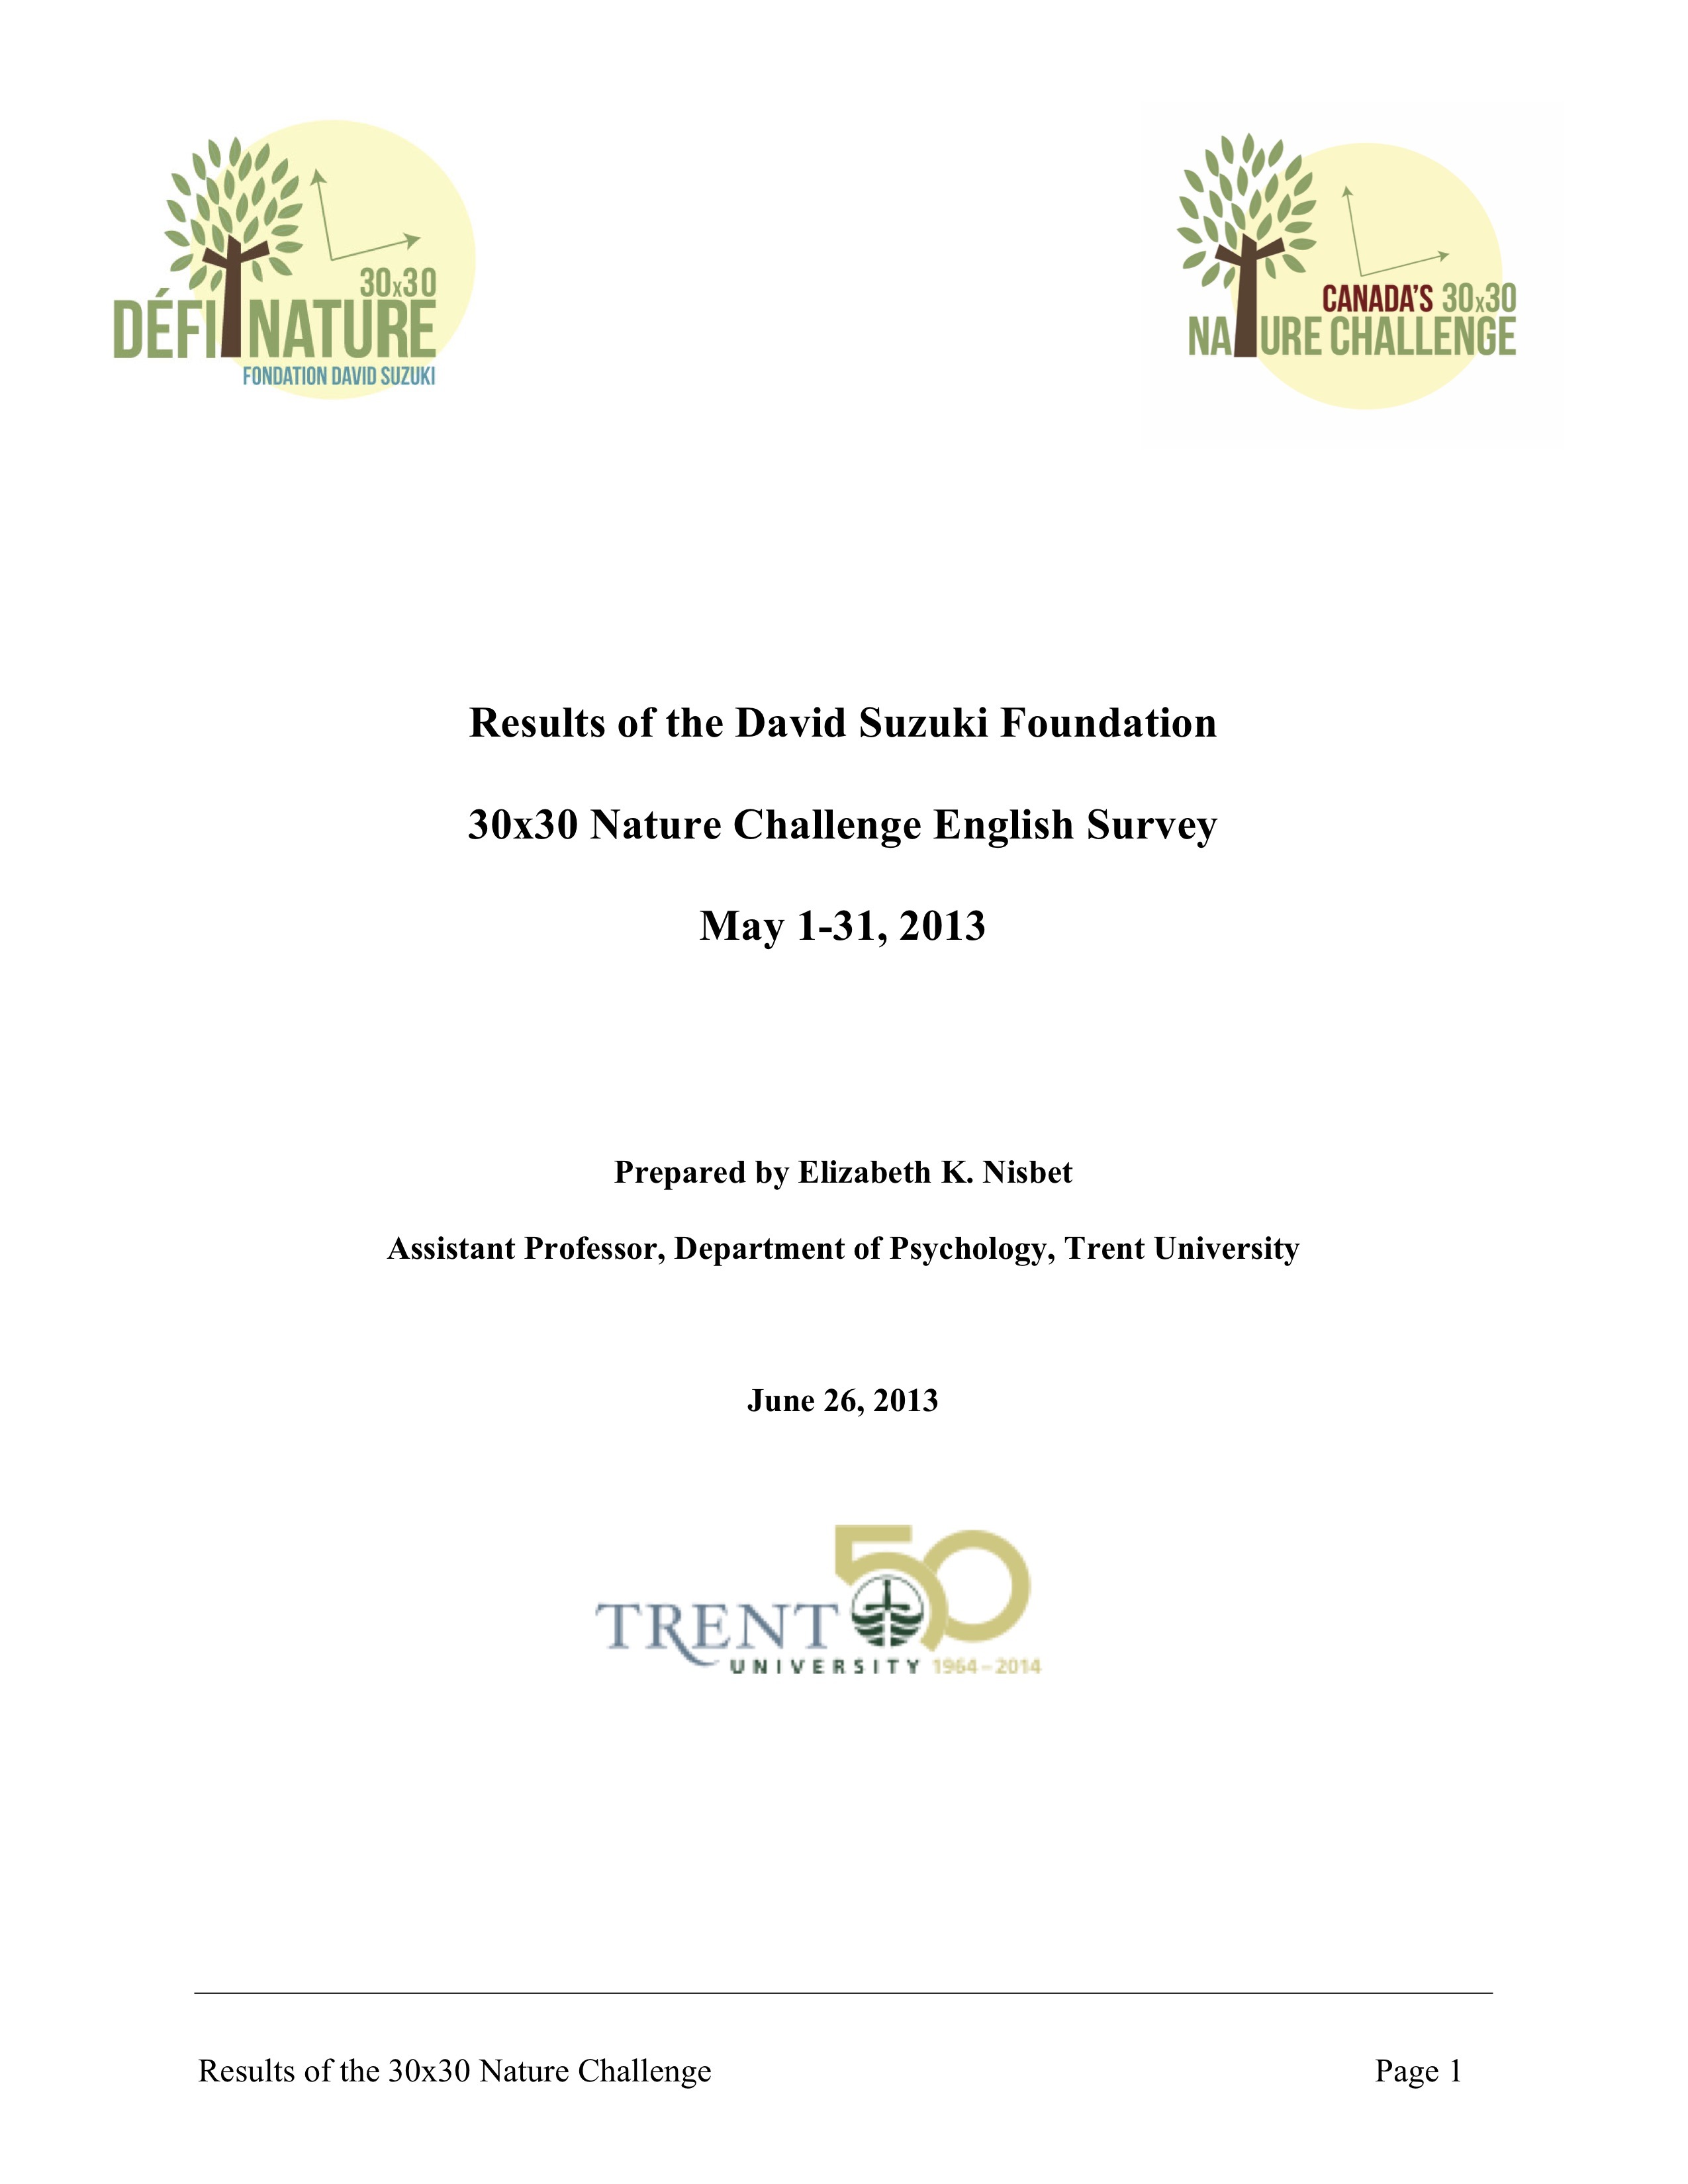 Results of the David Suzuki Foundation 30x30 Nature Challenge English Survey May 1-31, 2013